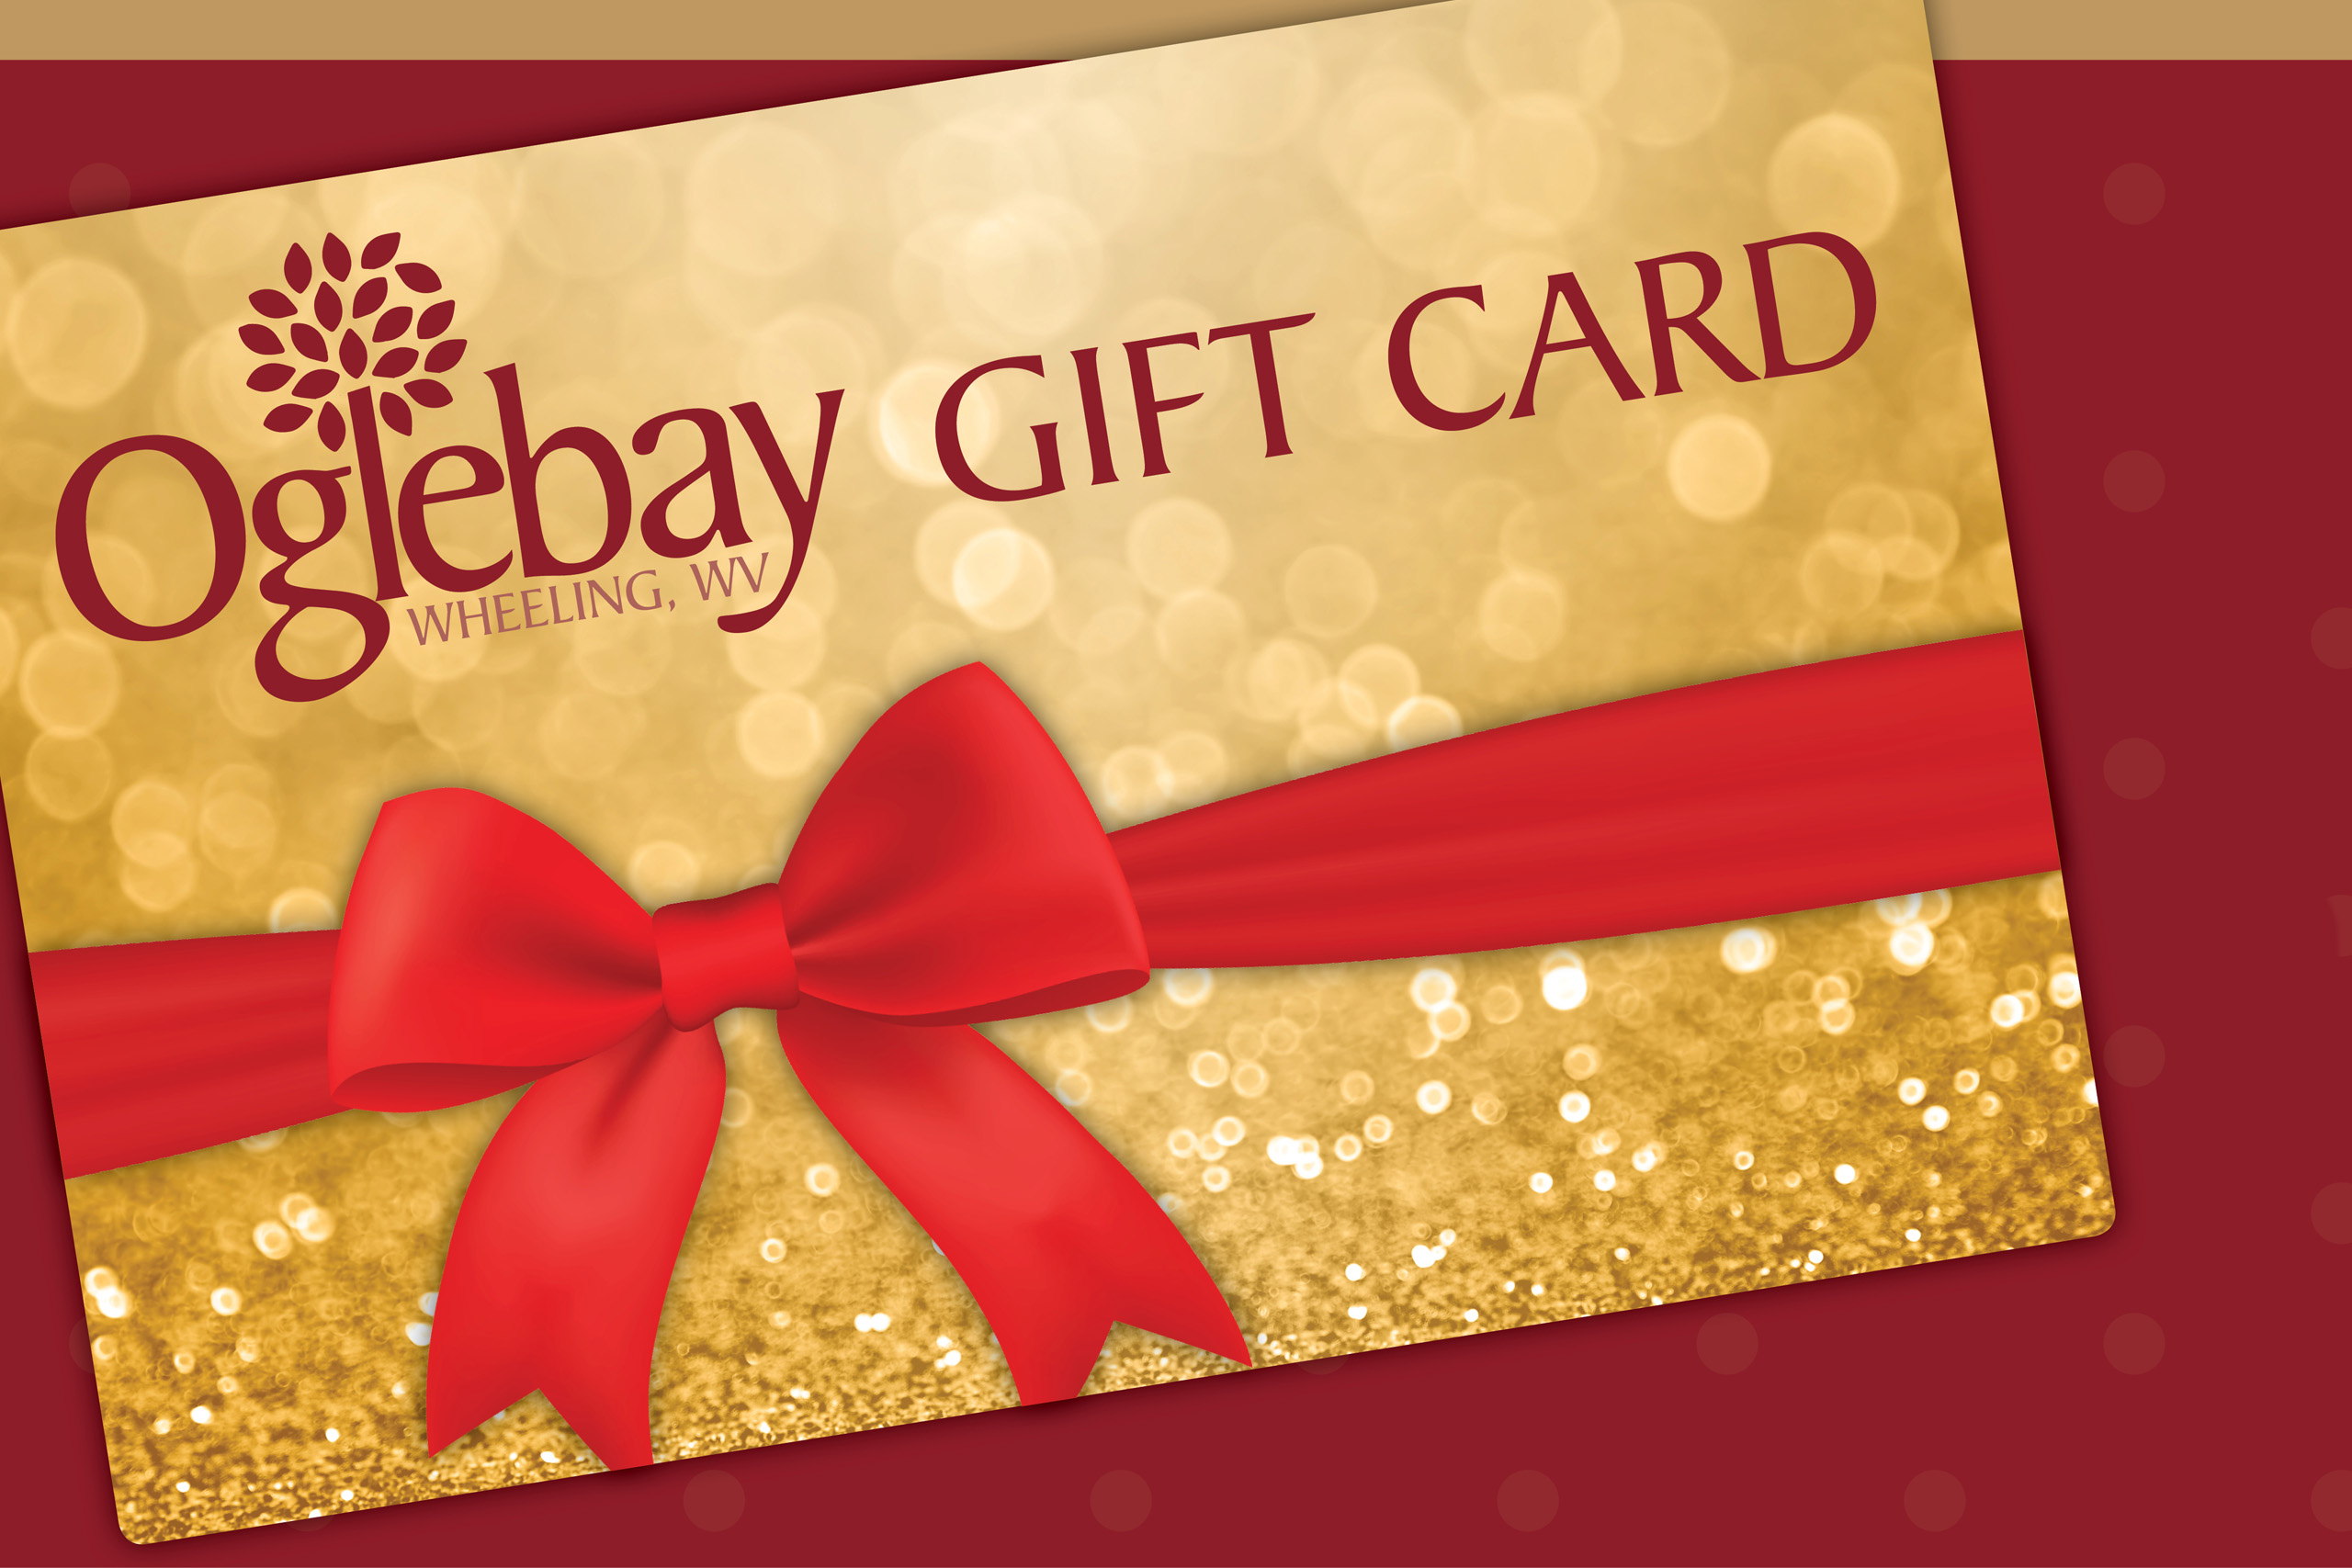 Oglebay Gift Card Promotion photo